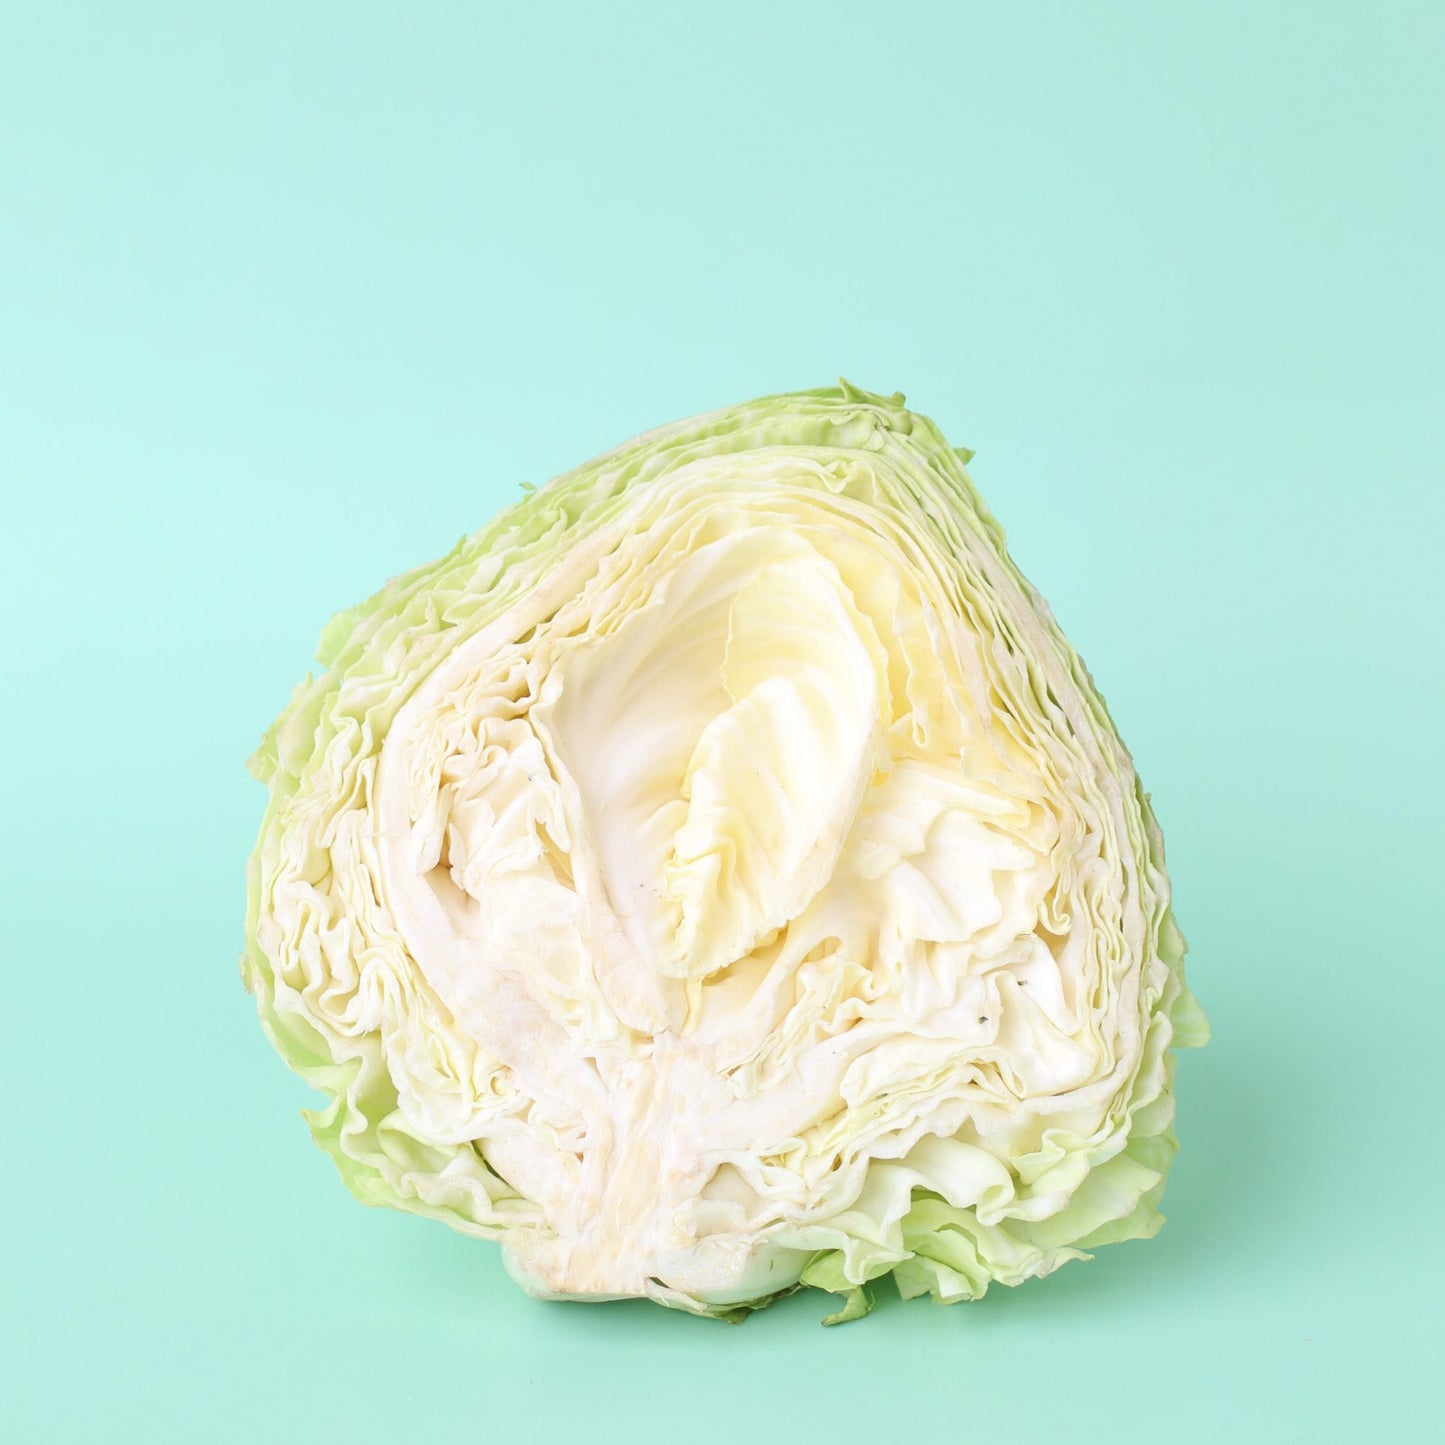 Cabbage Green Half